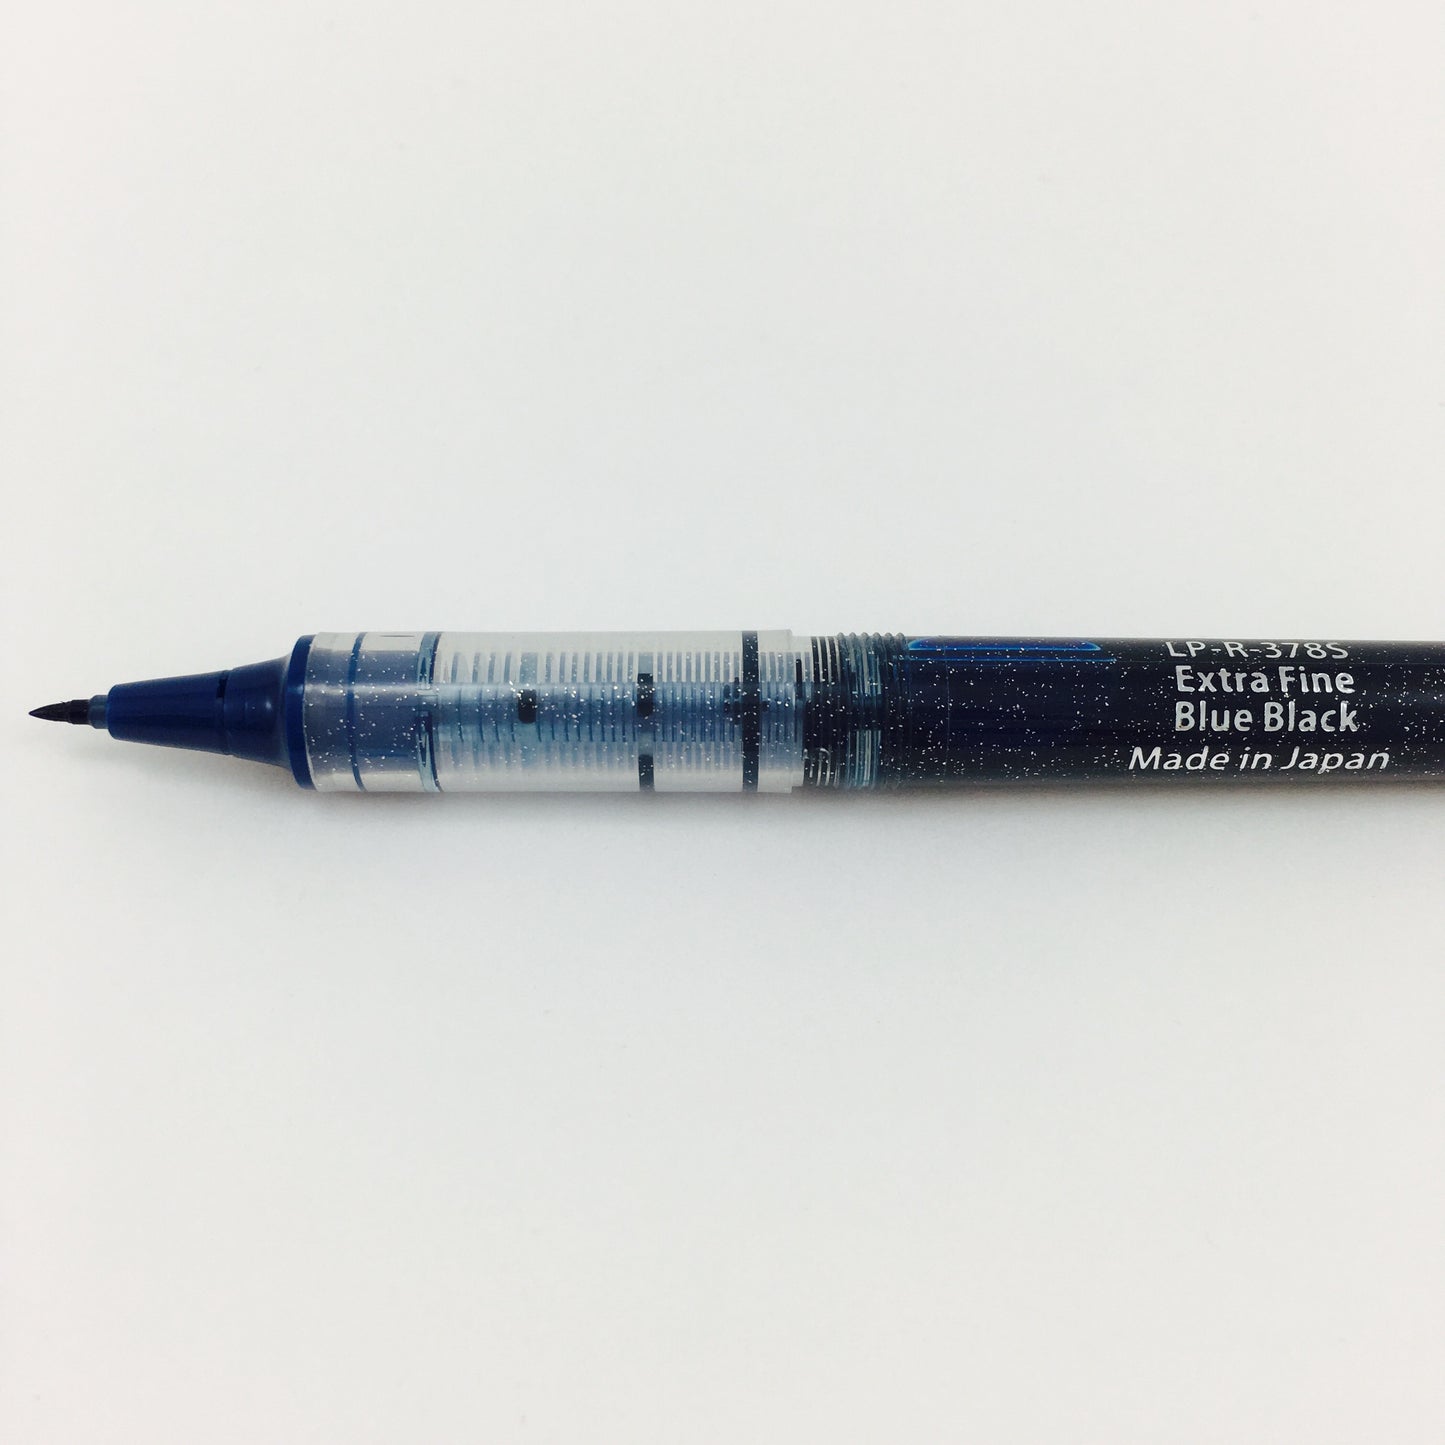 Zig by Kuretake "Cocoiro" Pen Cartridges Refills - Blue Black / Extra Fine by Kuretake - K. A. Artist Shop